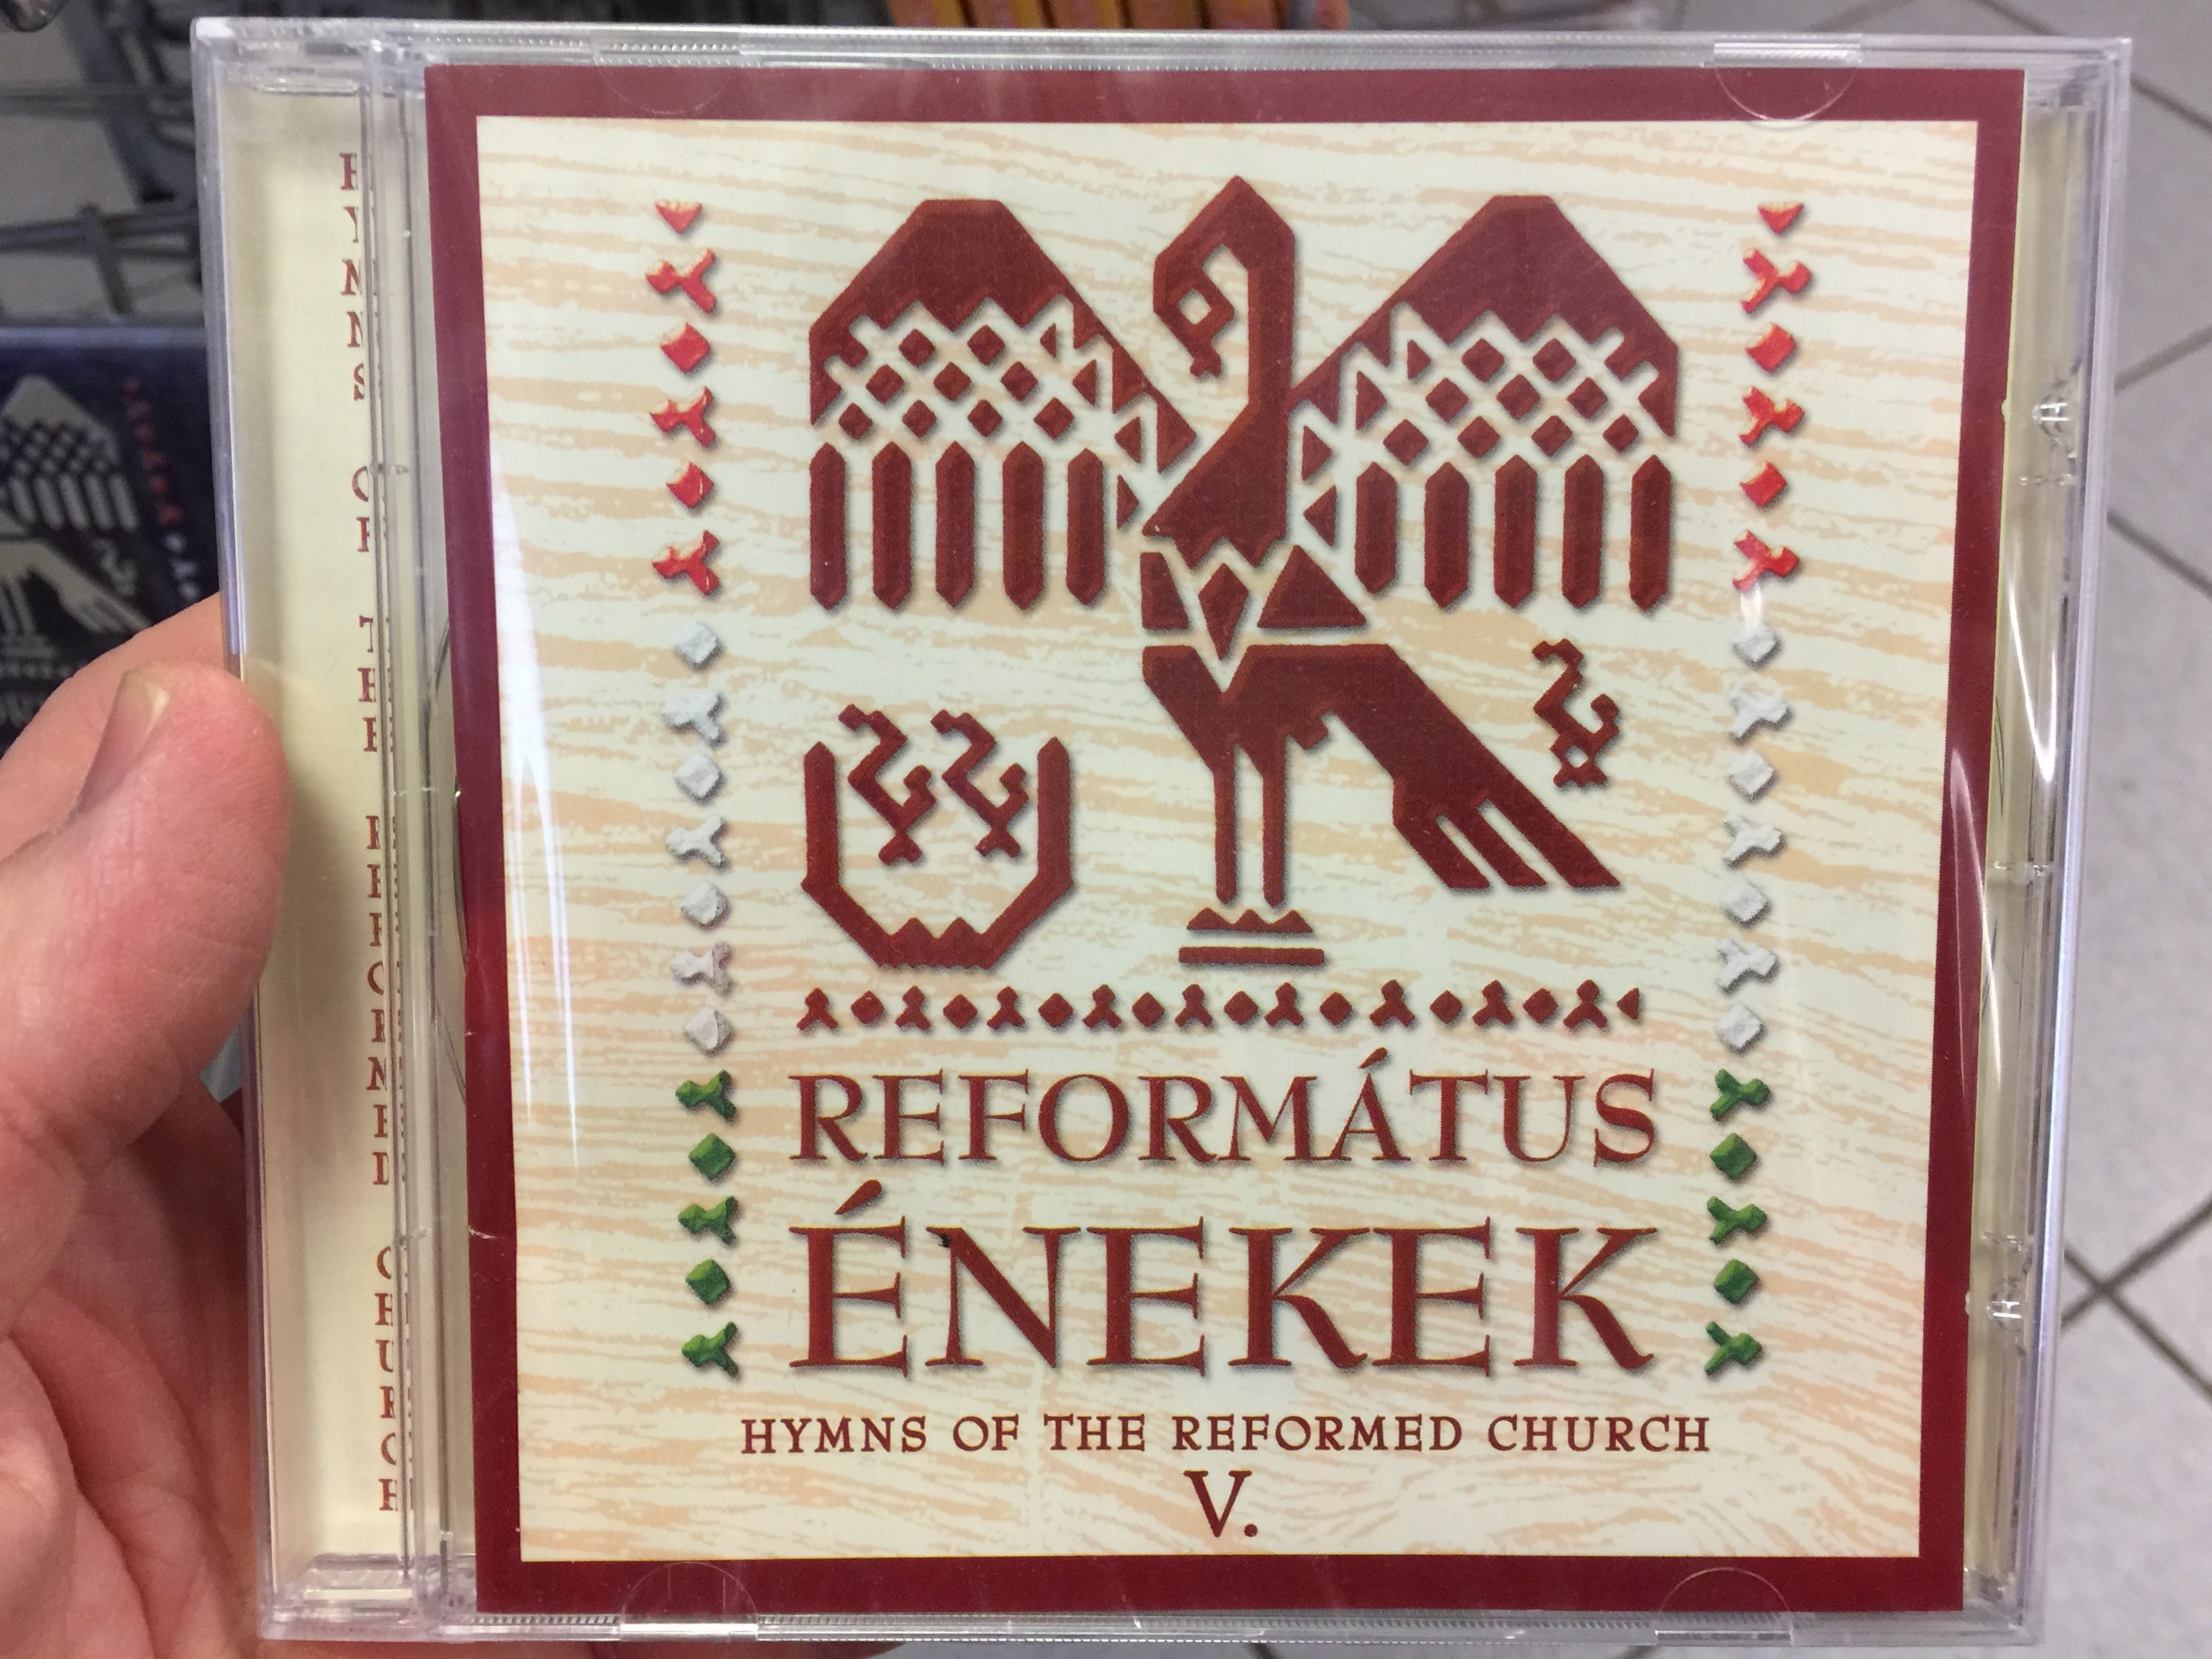 reform-tus-nekek-5.-audio-cd-2006-hymns-of-the-reformed-church-1.jpg